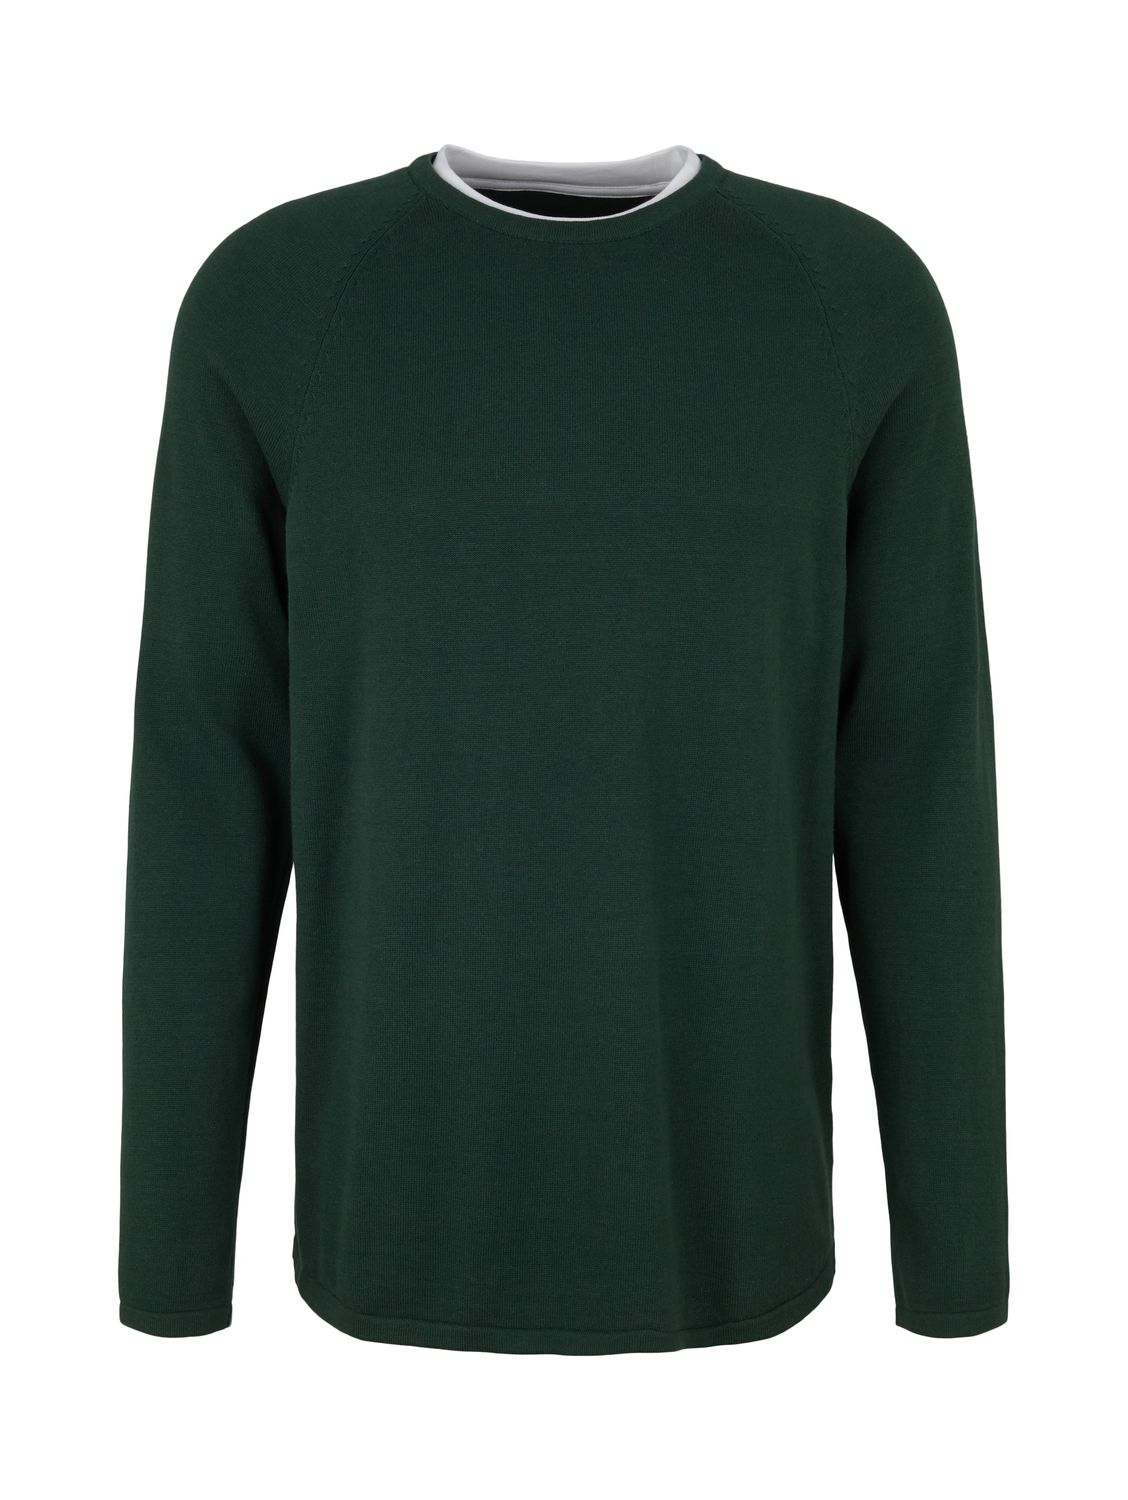 Пуловер TOM TAILOR Denim BASIC, зеленый трусы tom tailor размер xxl зеленый